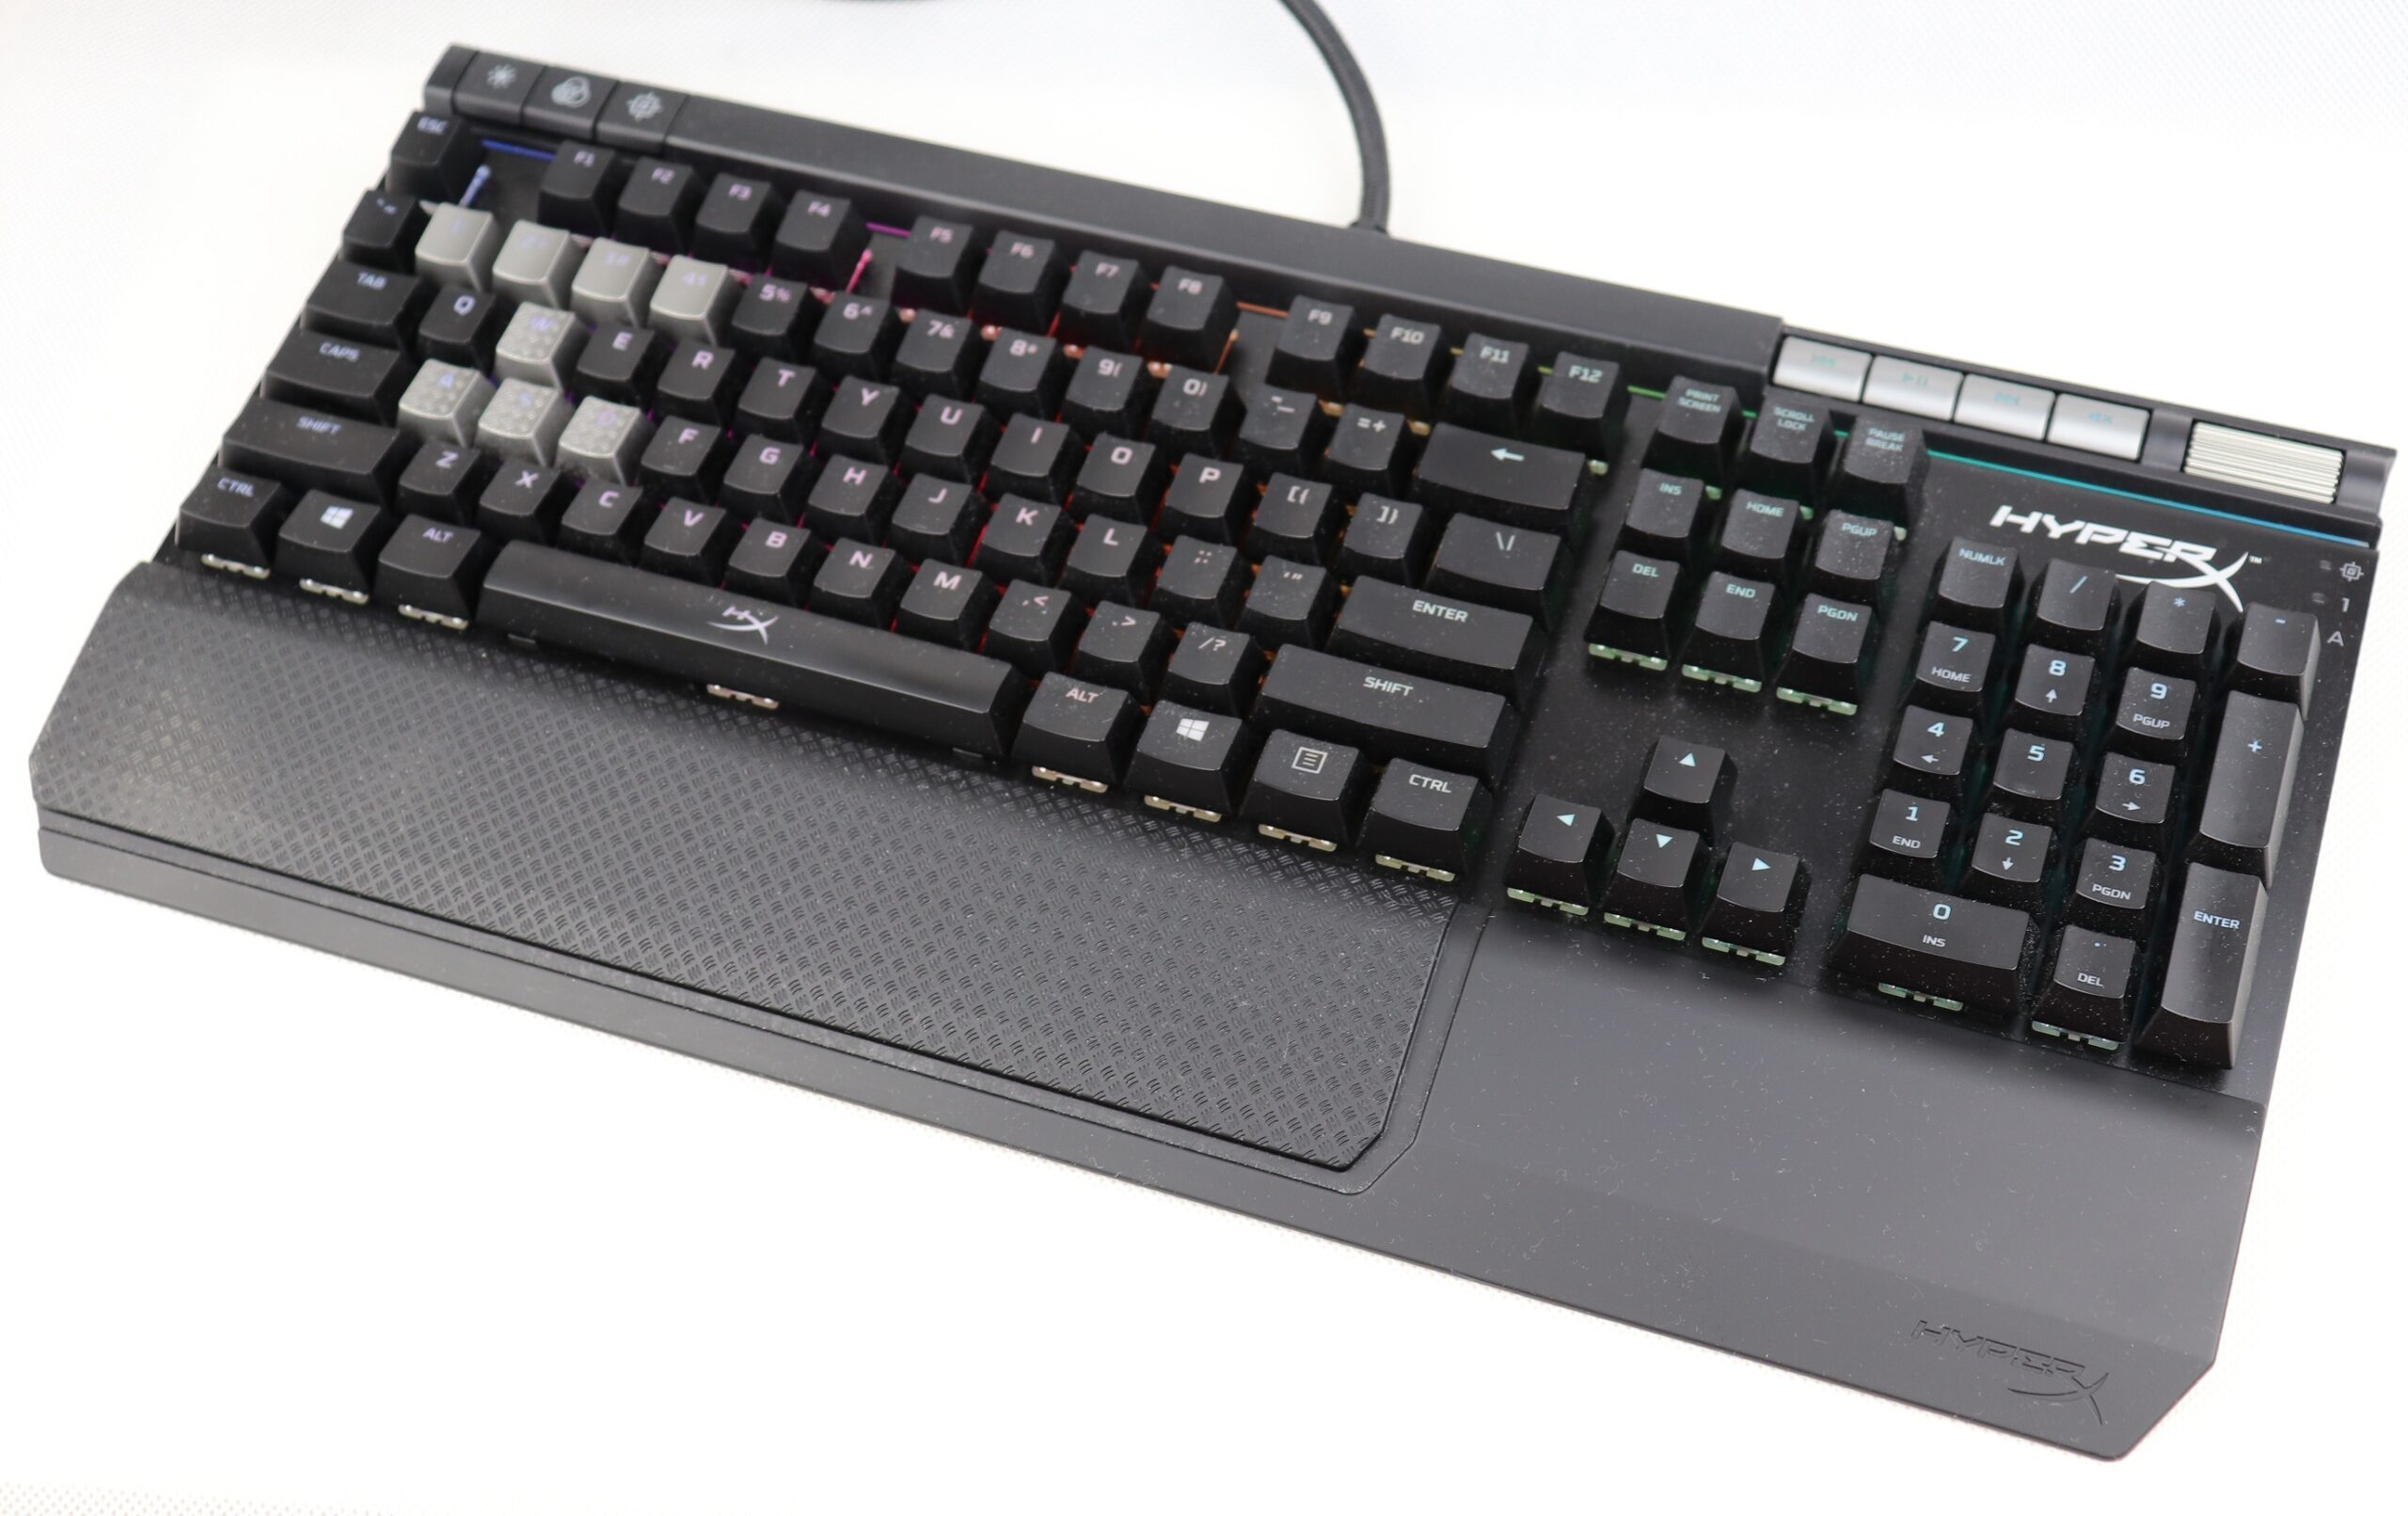 HyperX Alloy Elite RGB Mechanical Keyboard